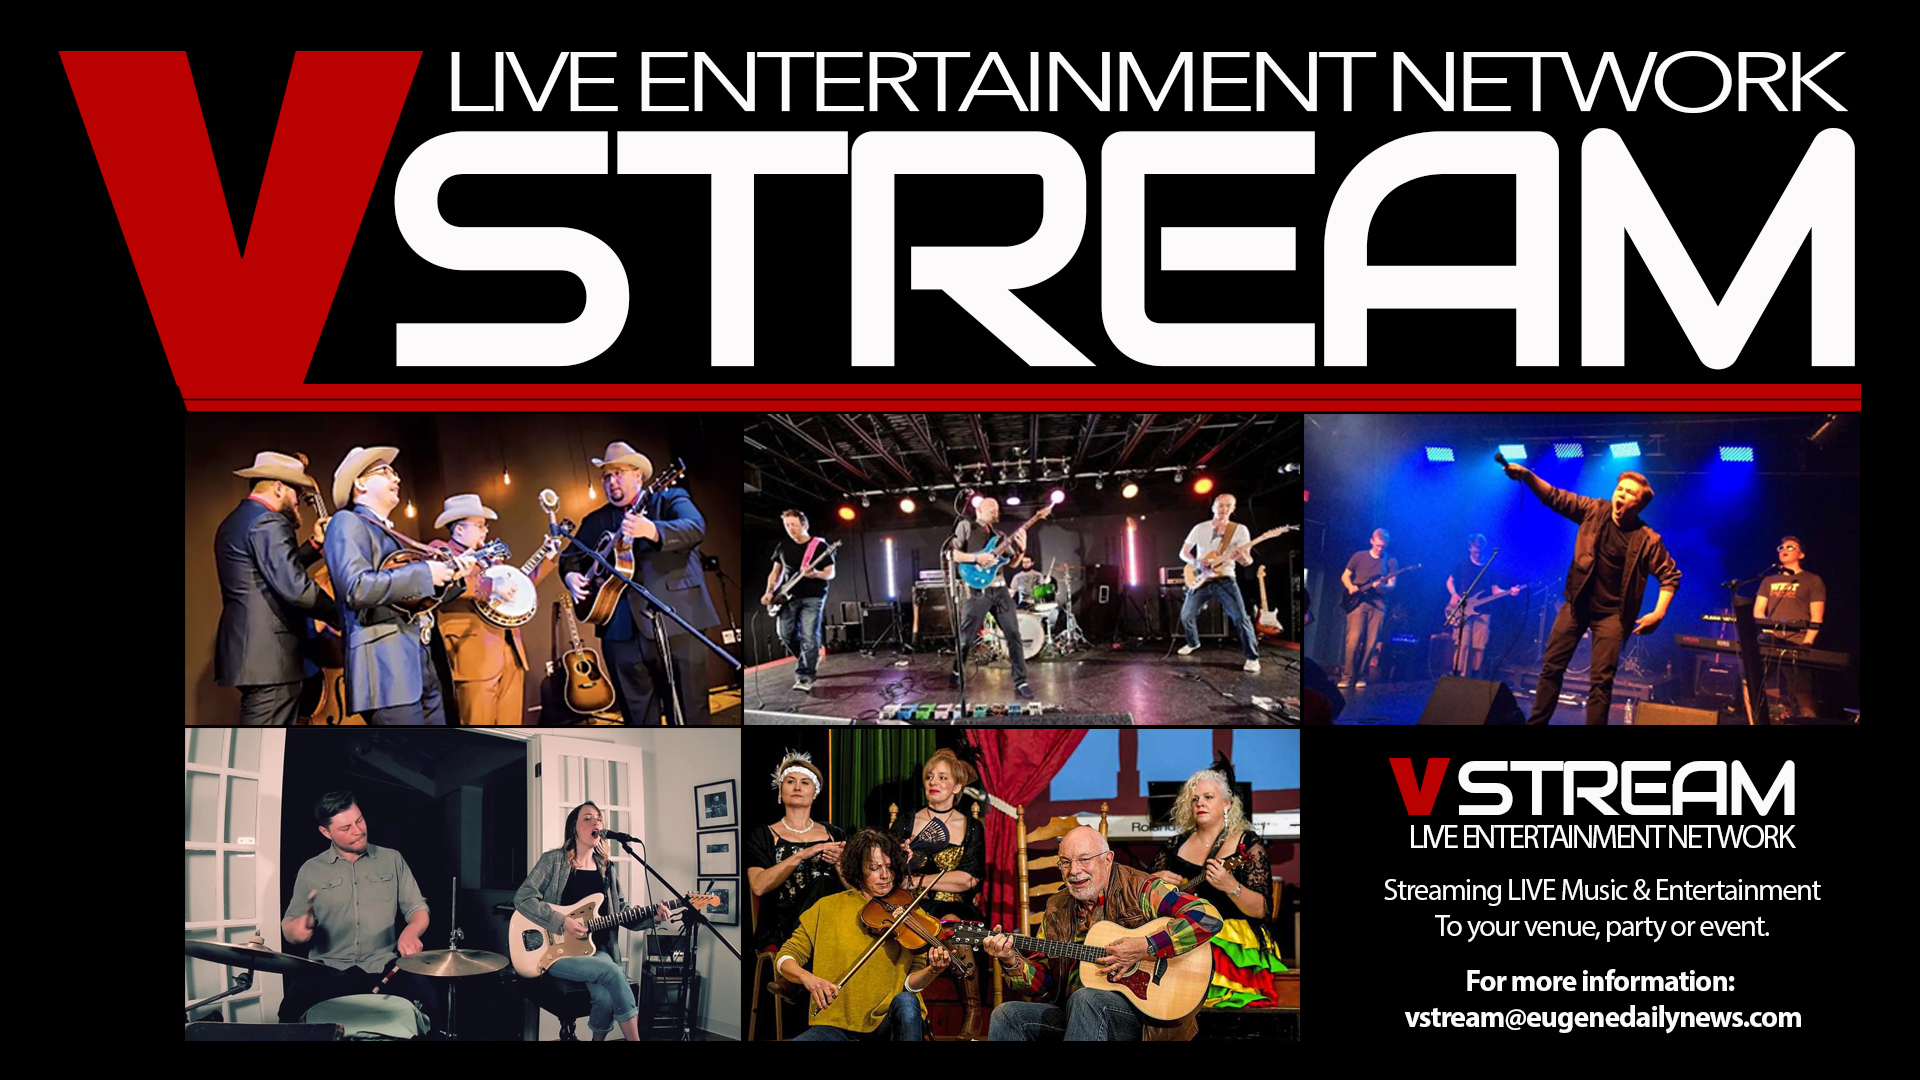 VSTREAM Live Entertainment Network